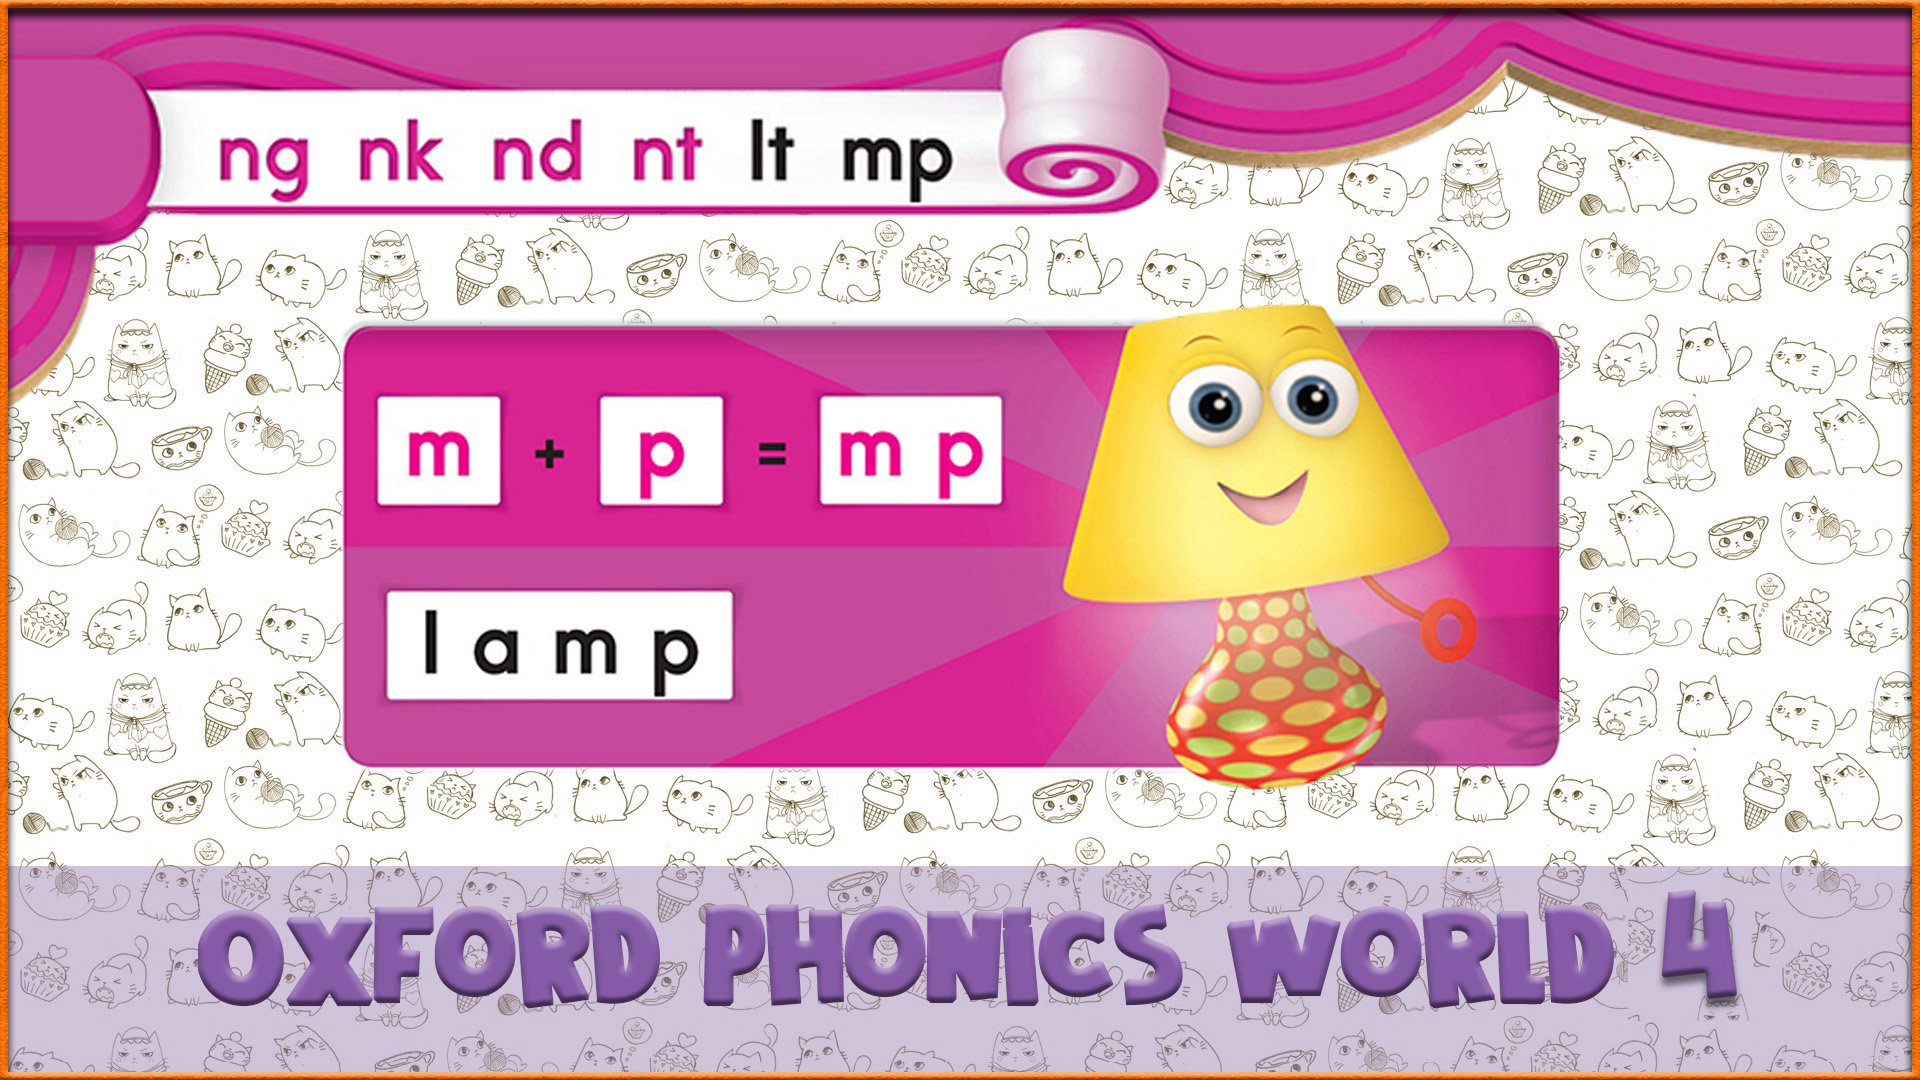 | mp | Oxford Phonics World 4 - Consonant Blends. #39